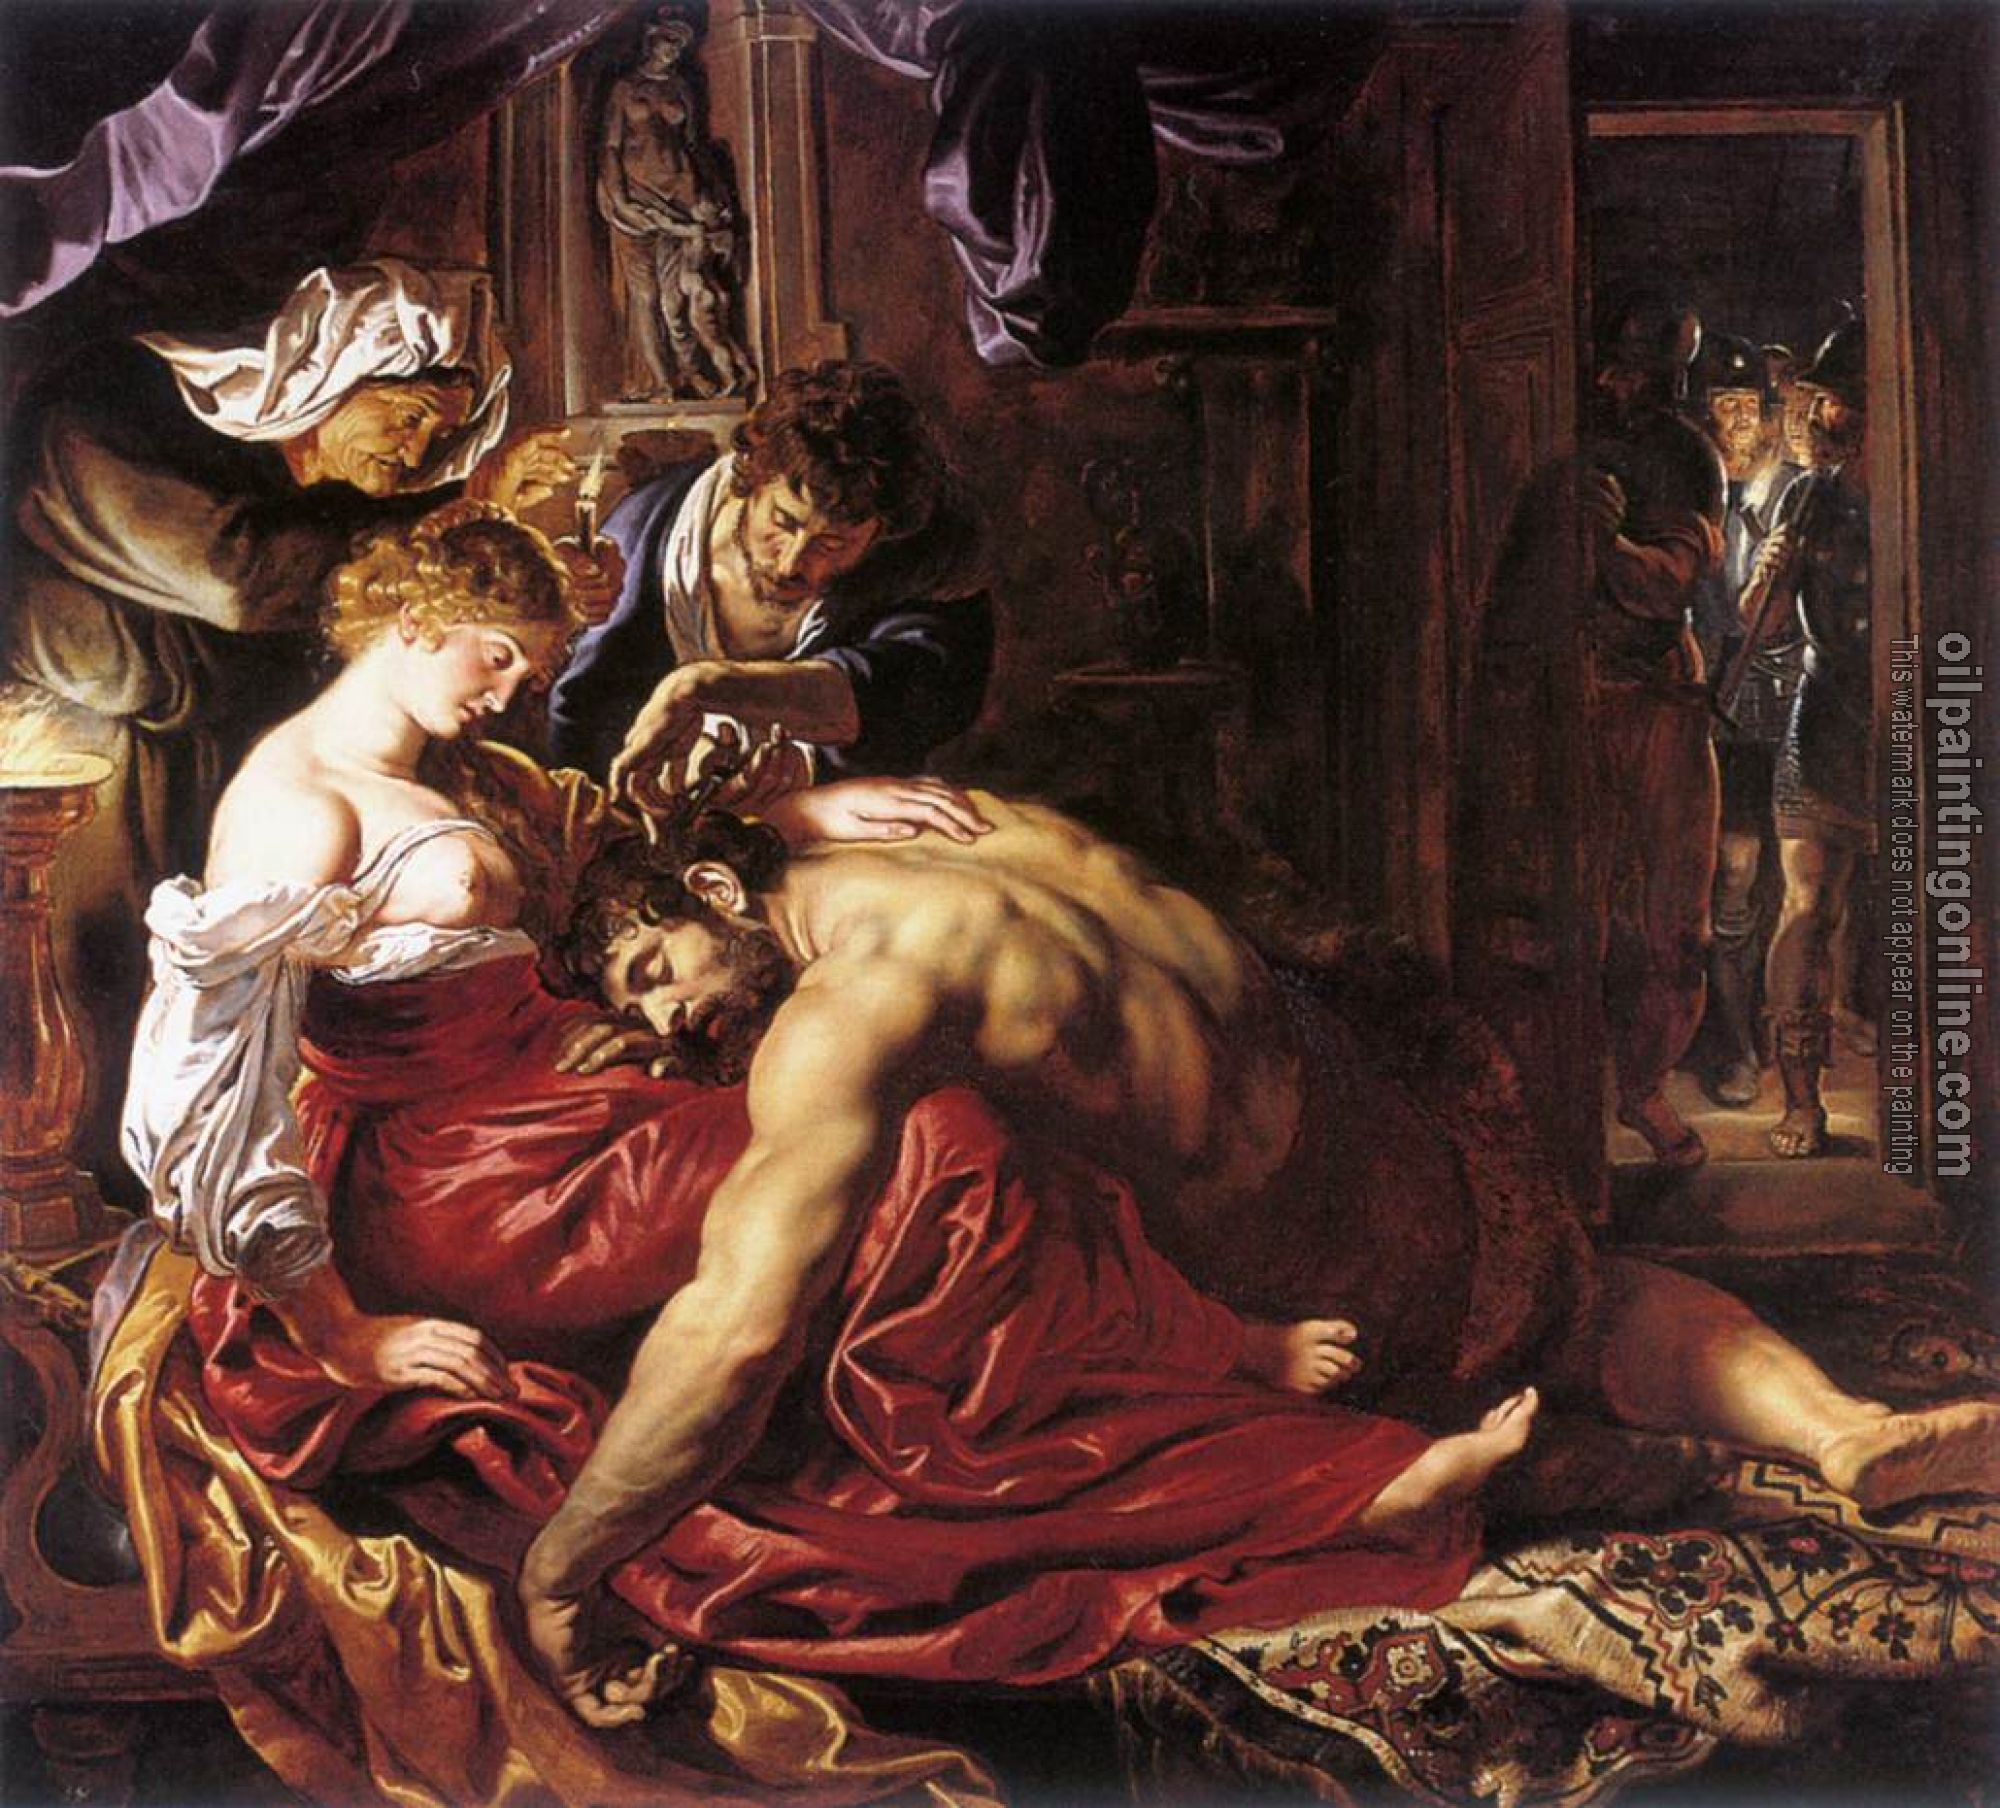 Rubens, Peter Paul - Samson and Delilah